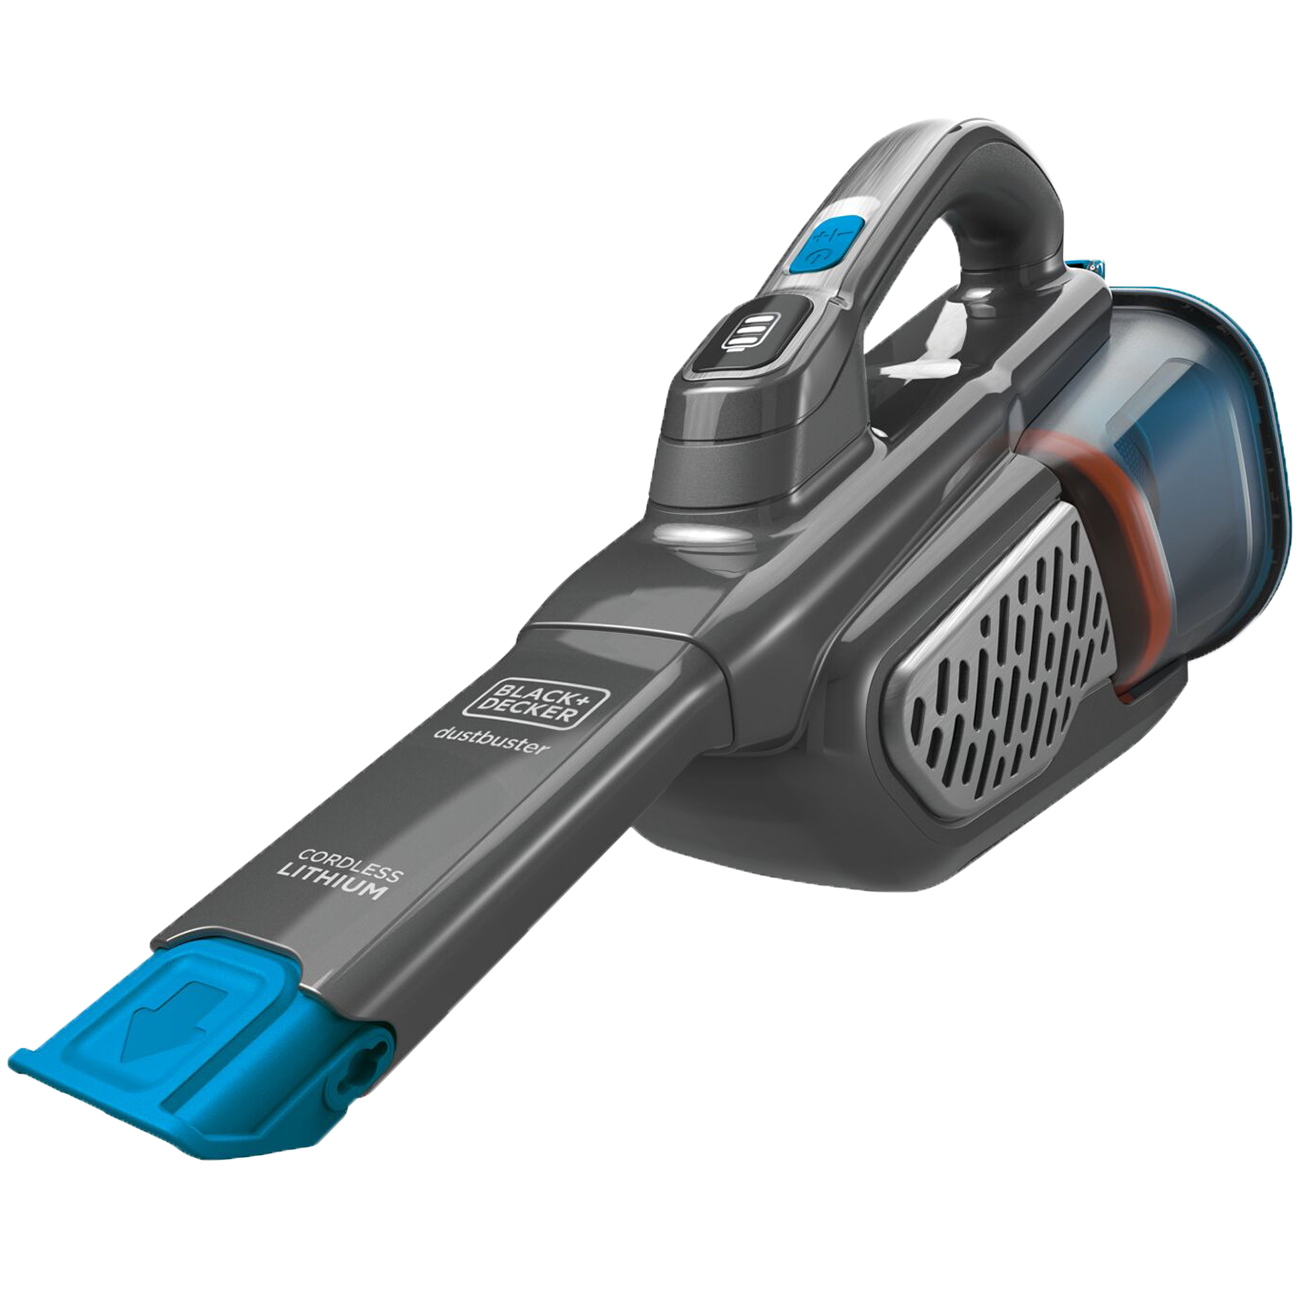 Gen 9.5 Lithium Dustbuster Advancedclean+ Cordless Hand Vacuum - Slate Blue